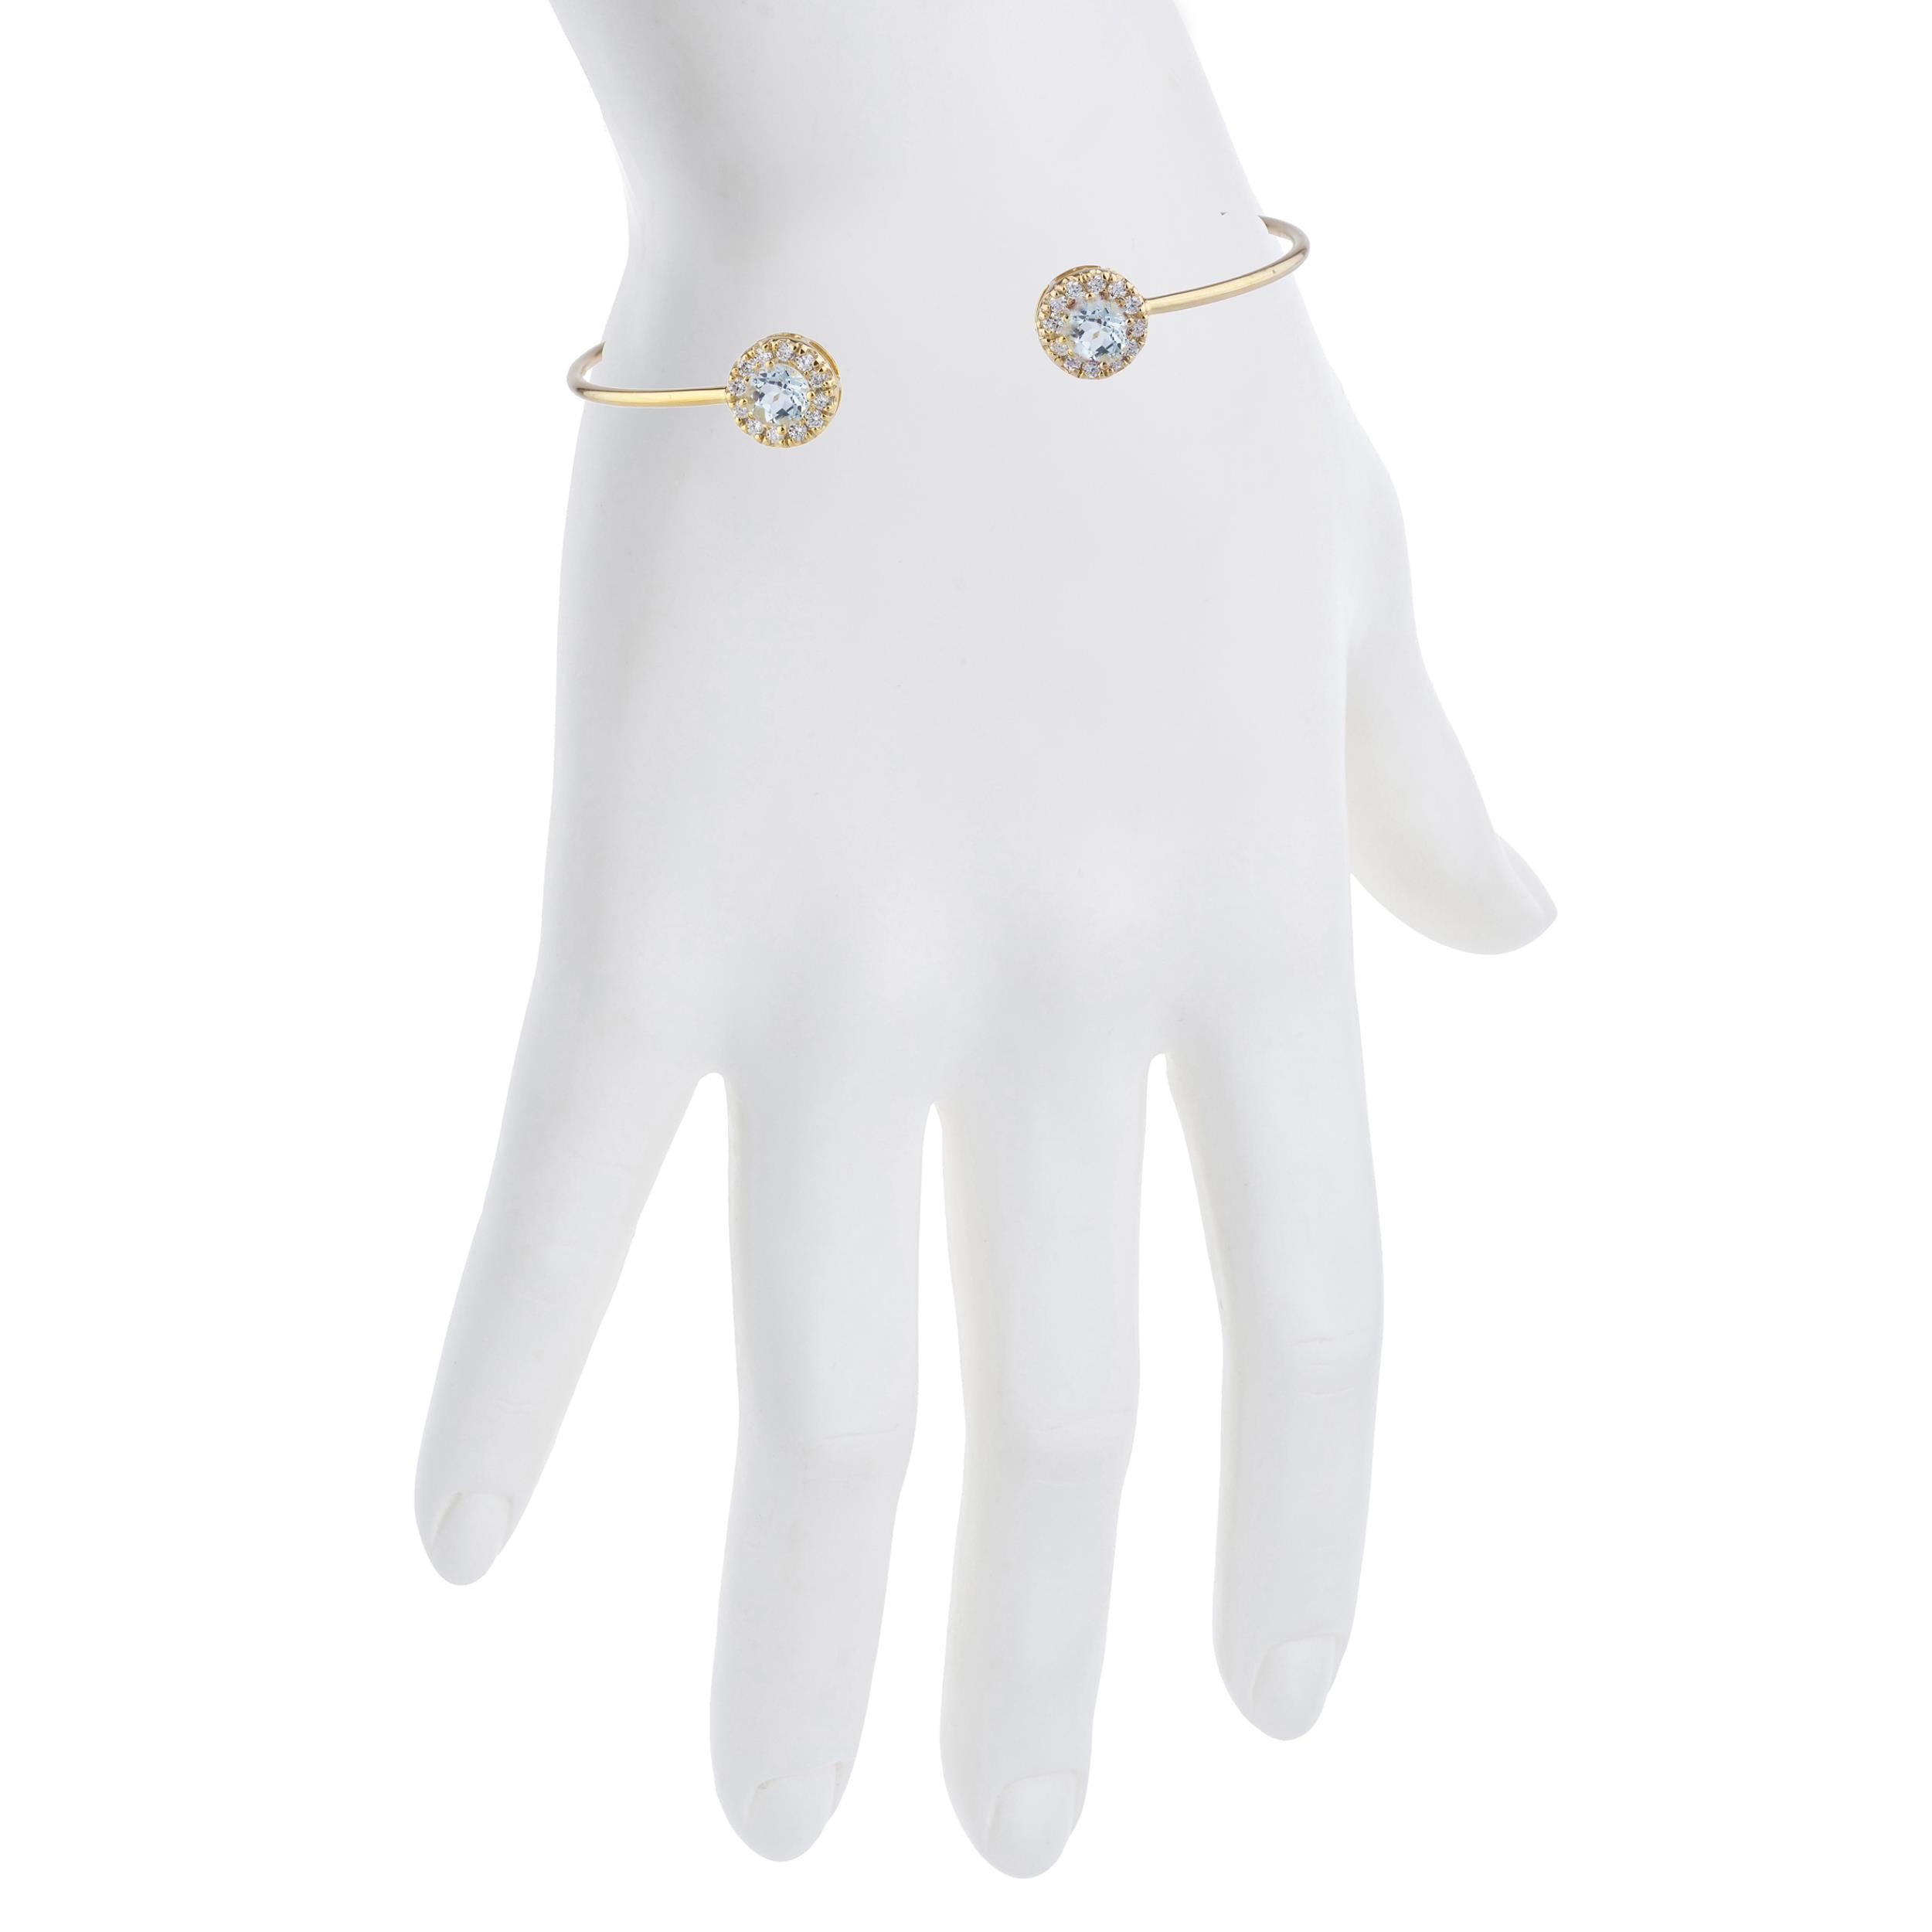 1 Ct Genuine Aquamarine Halo Design Round Bangle Bracelet 14Kt Yellow Gold Rose Gold Silver